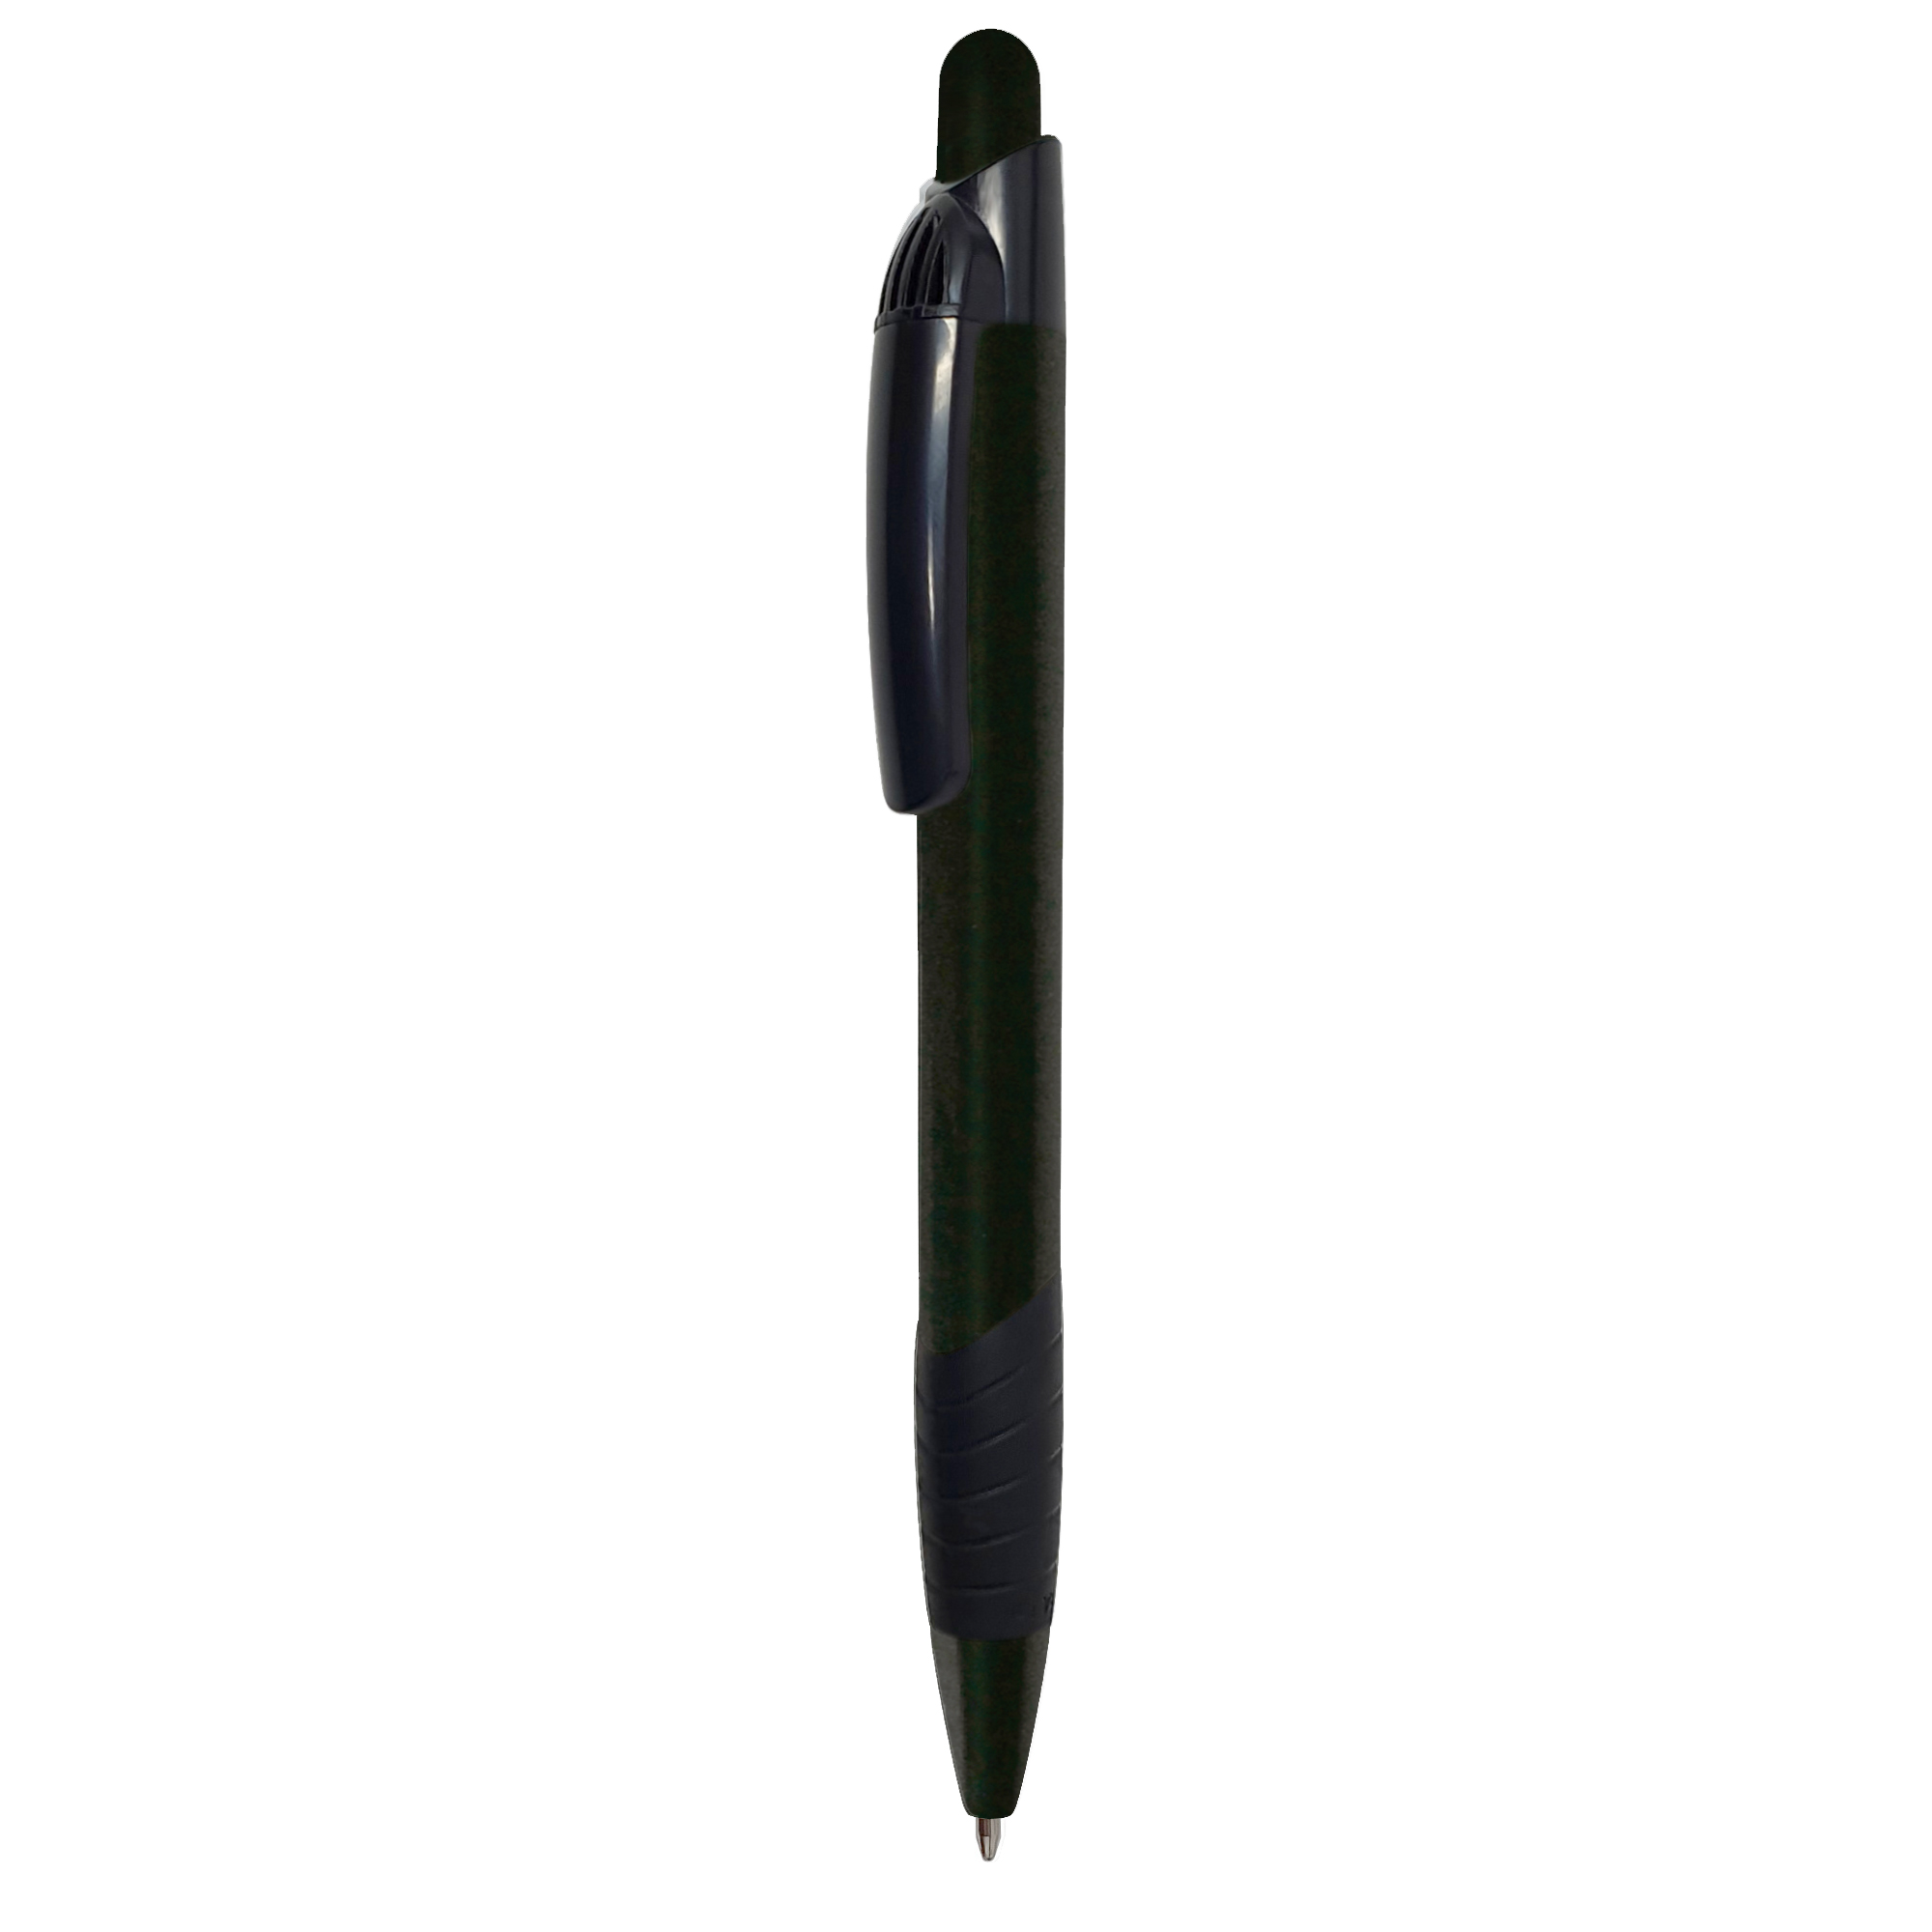 Bolígrafo Sydney
Color negro completo